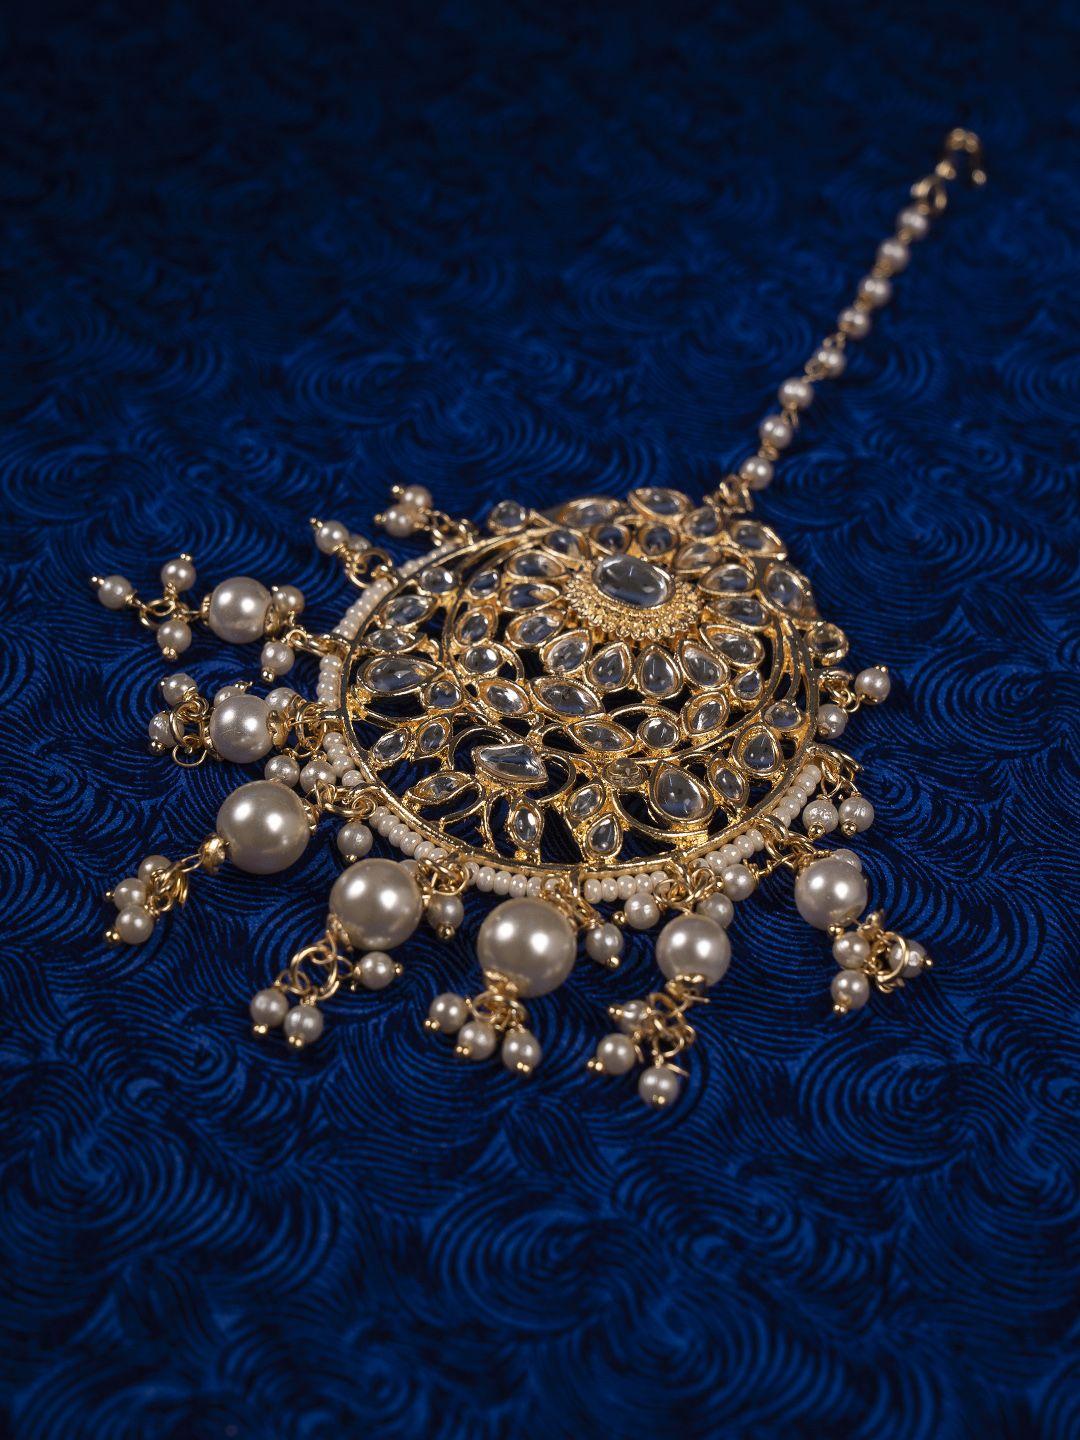 shoshaa 22kt gold plated silver-toned & off-white kundan & pearl studded maang tikka